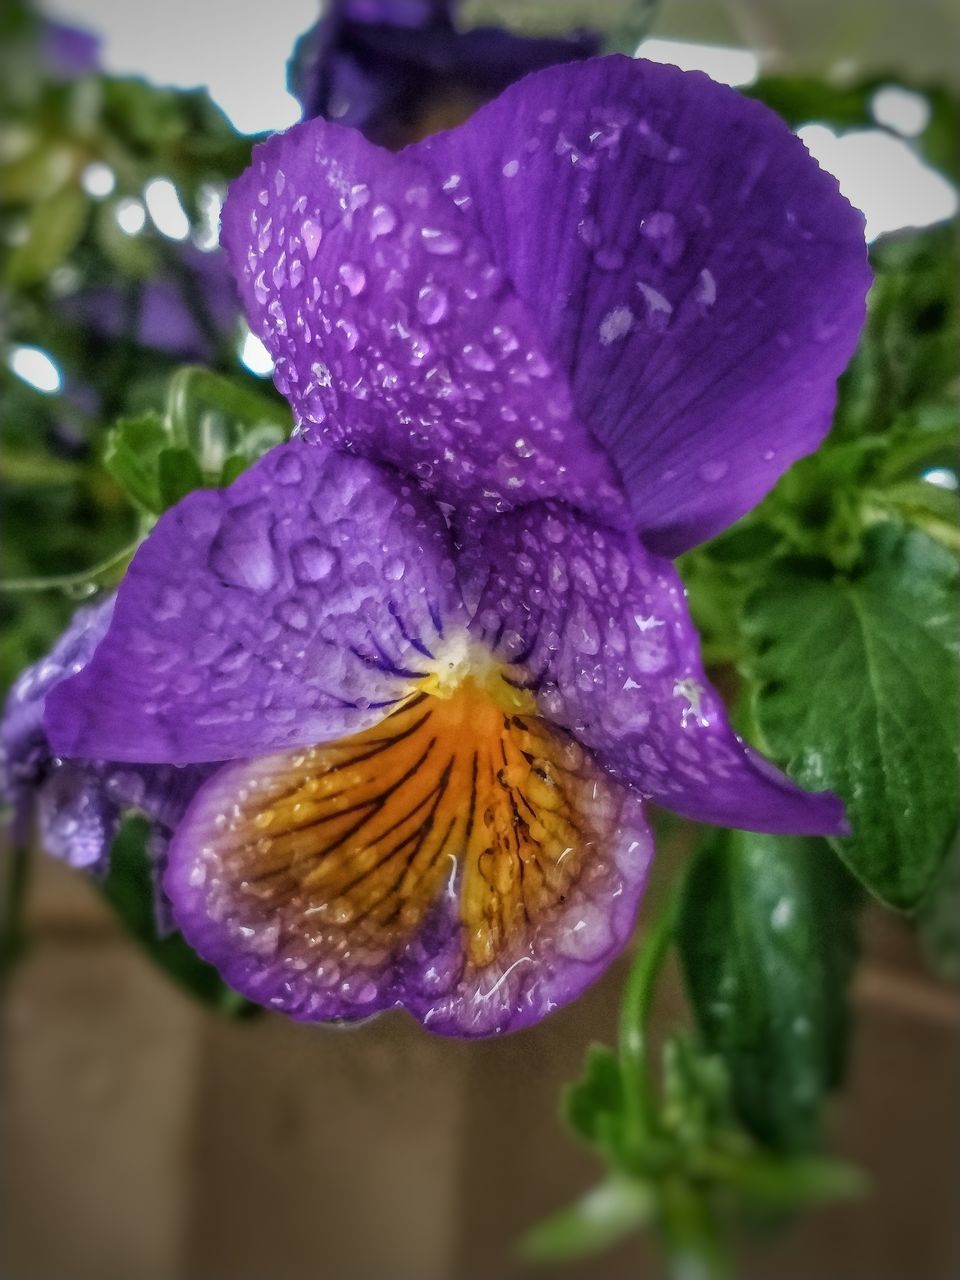 CLOSE-UP OF WET PURPLE FLOWER IN RAIN